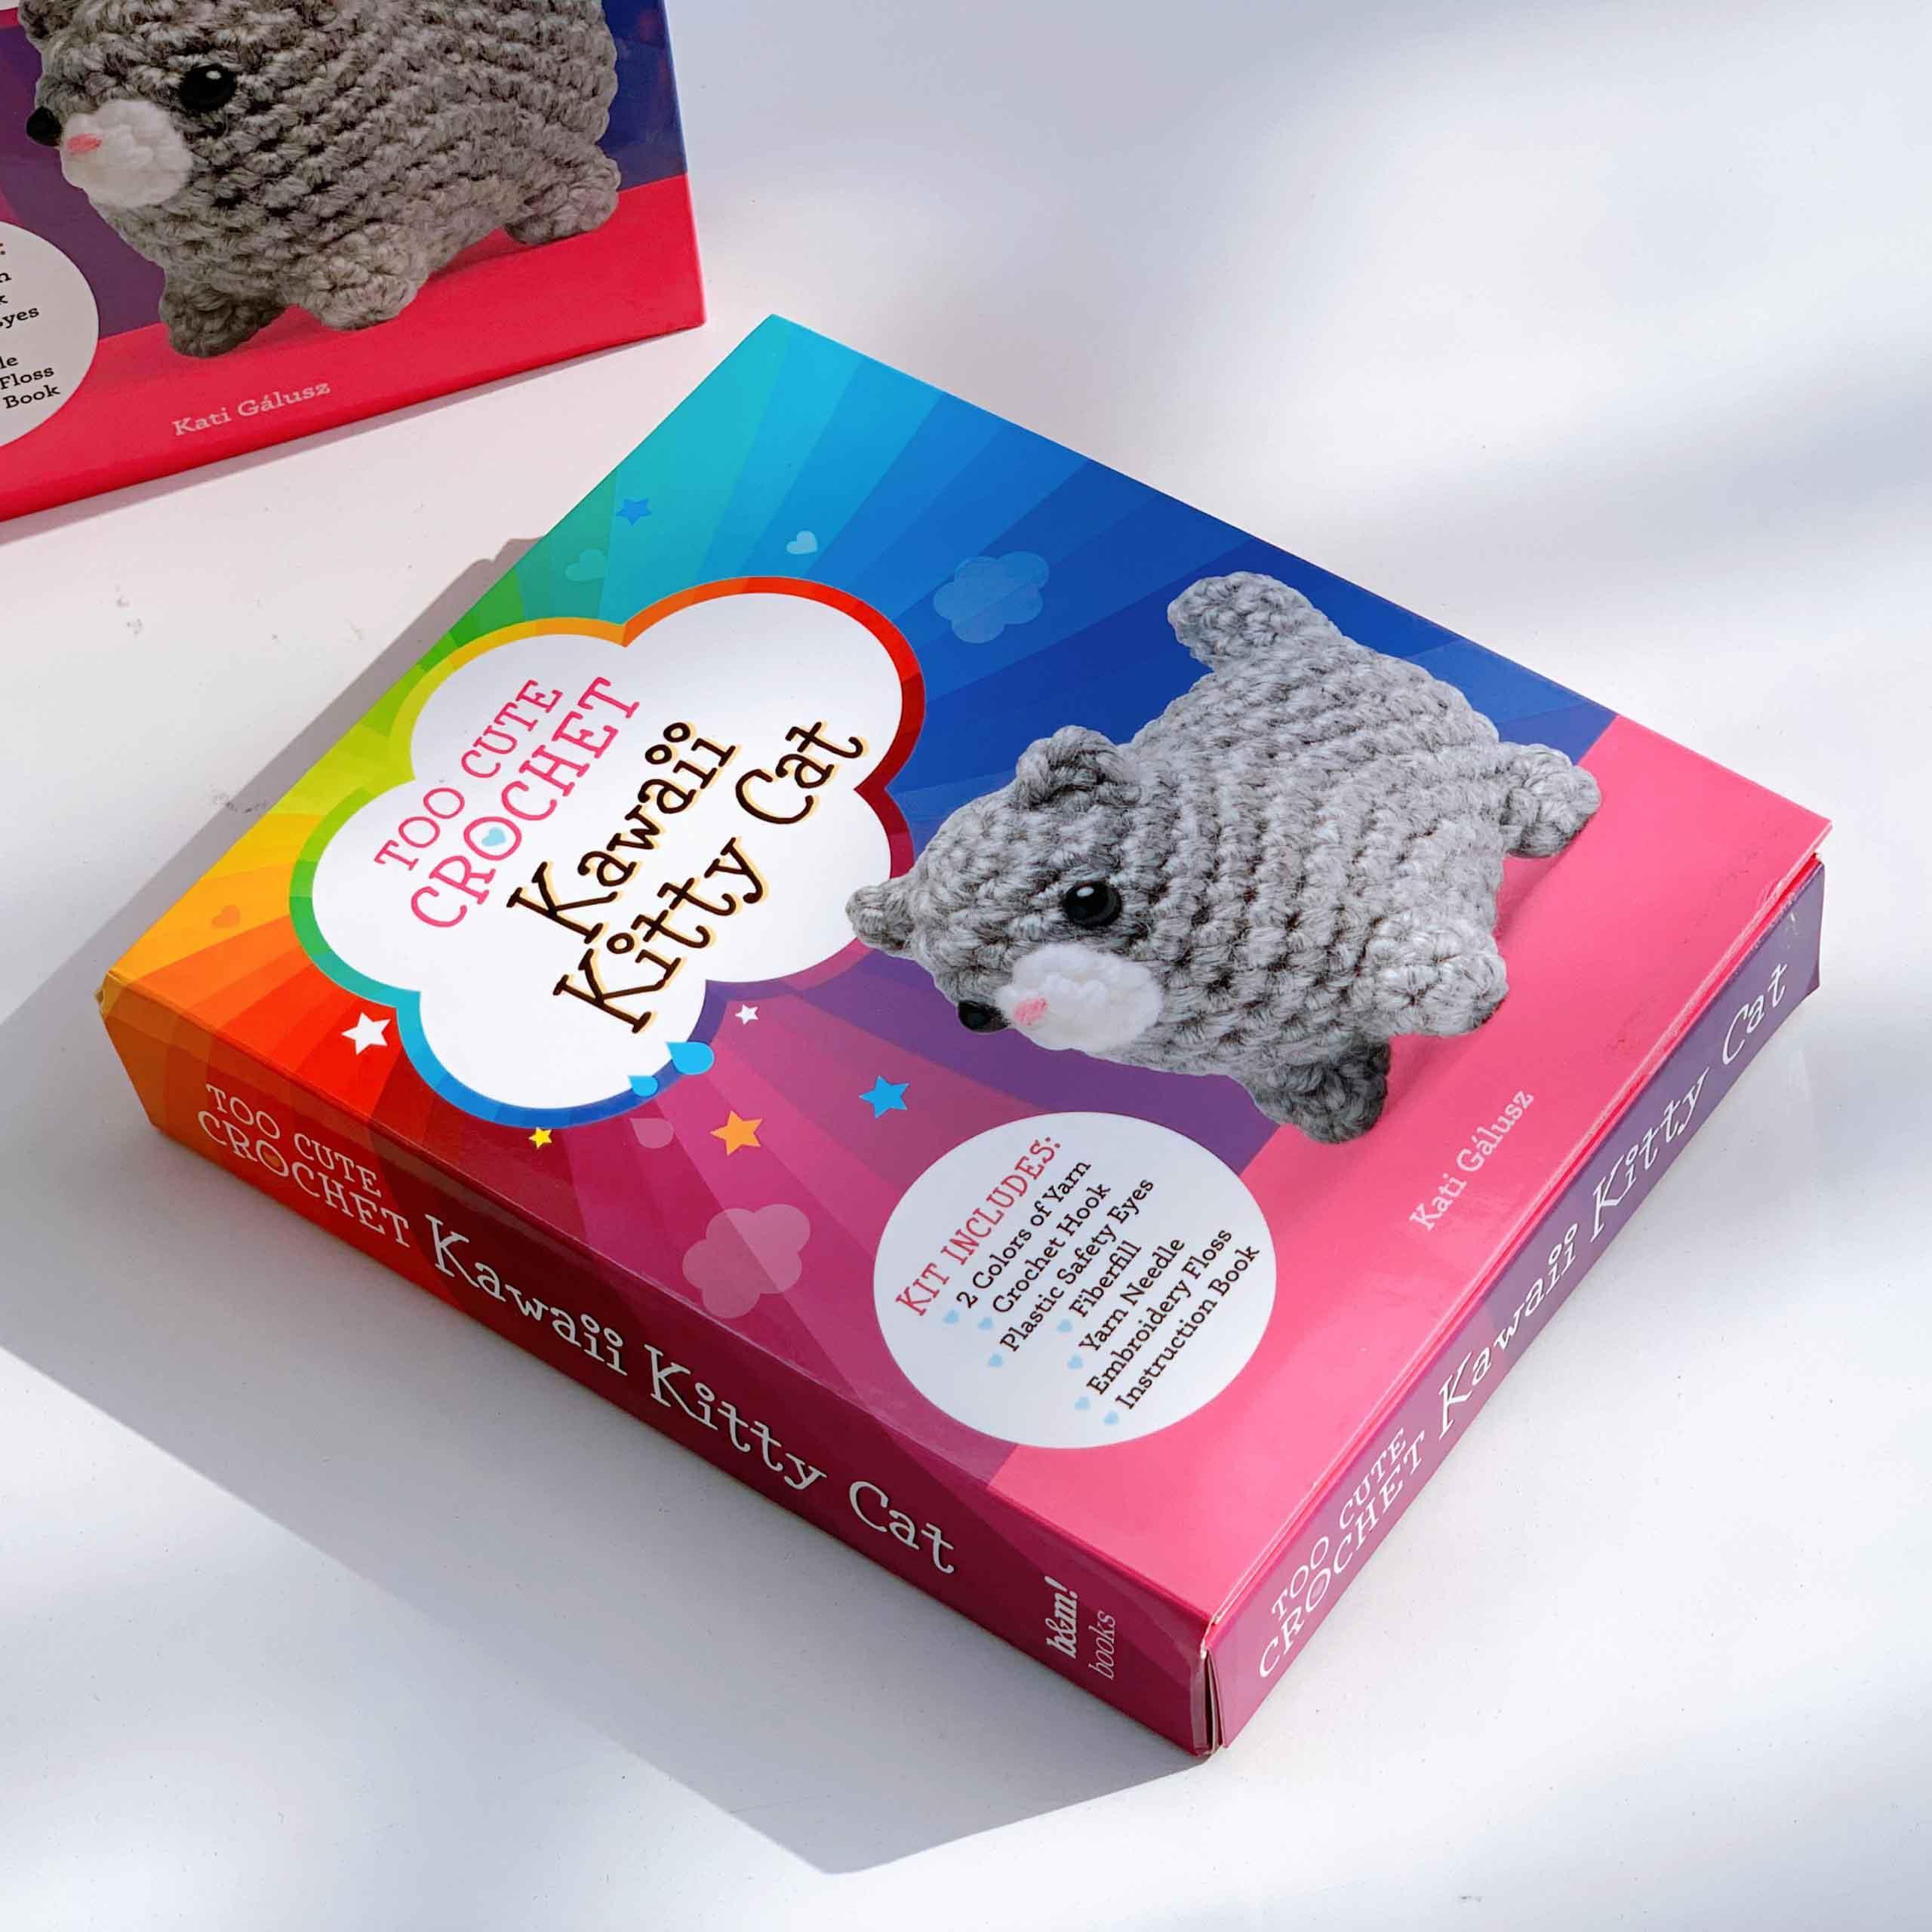 Too Cute Crochet: Kawaii Kitty Cat